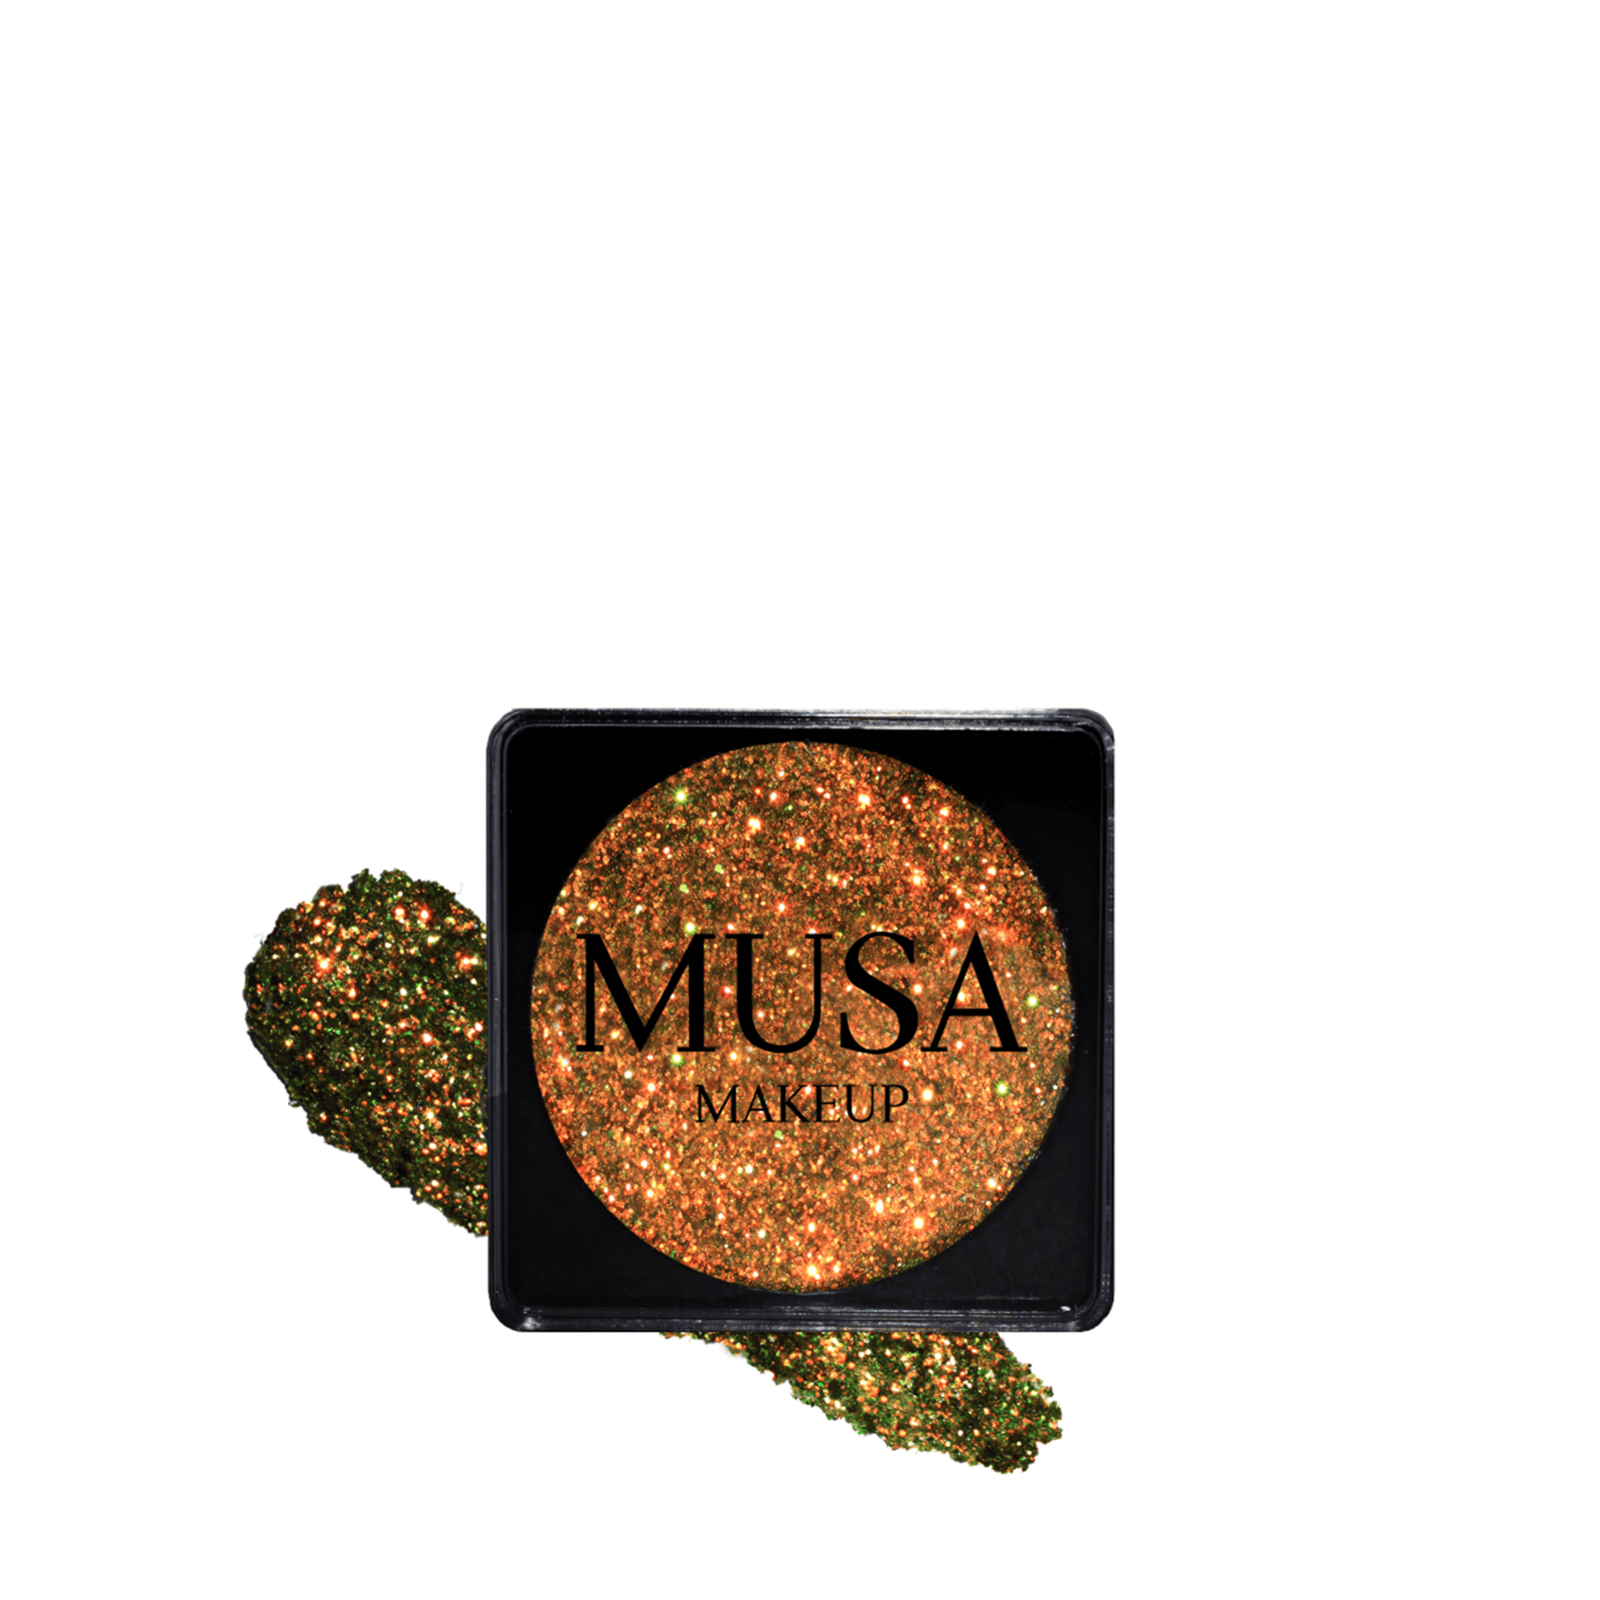 MUSA Makeup Creamy Glitter Eve's Apple 4g (0.14 oz)